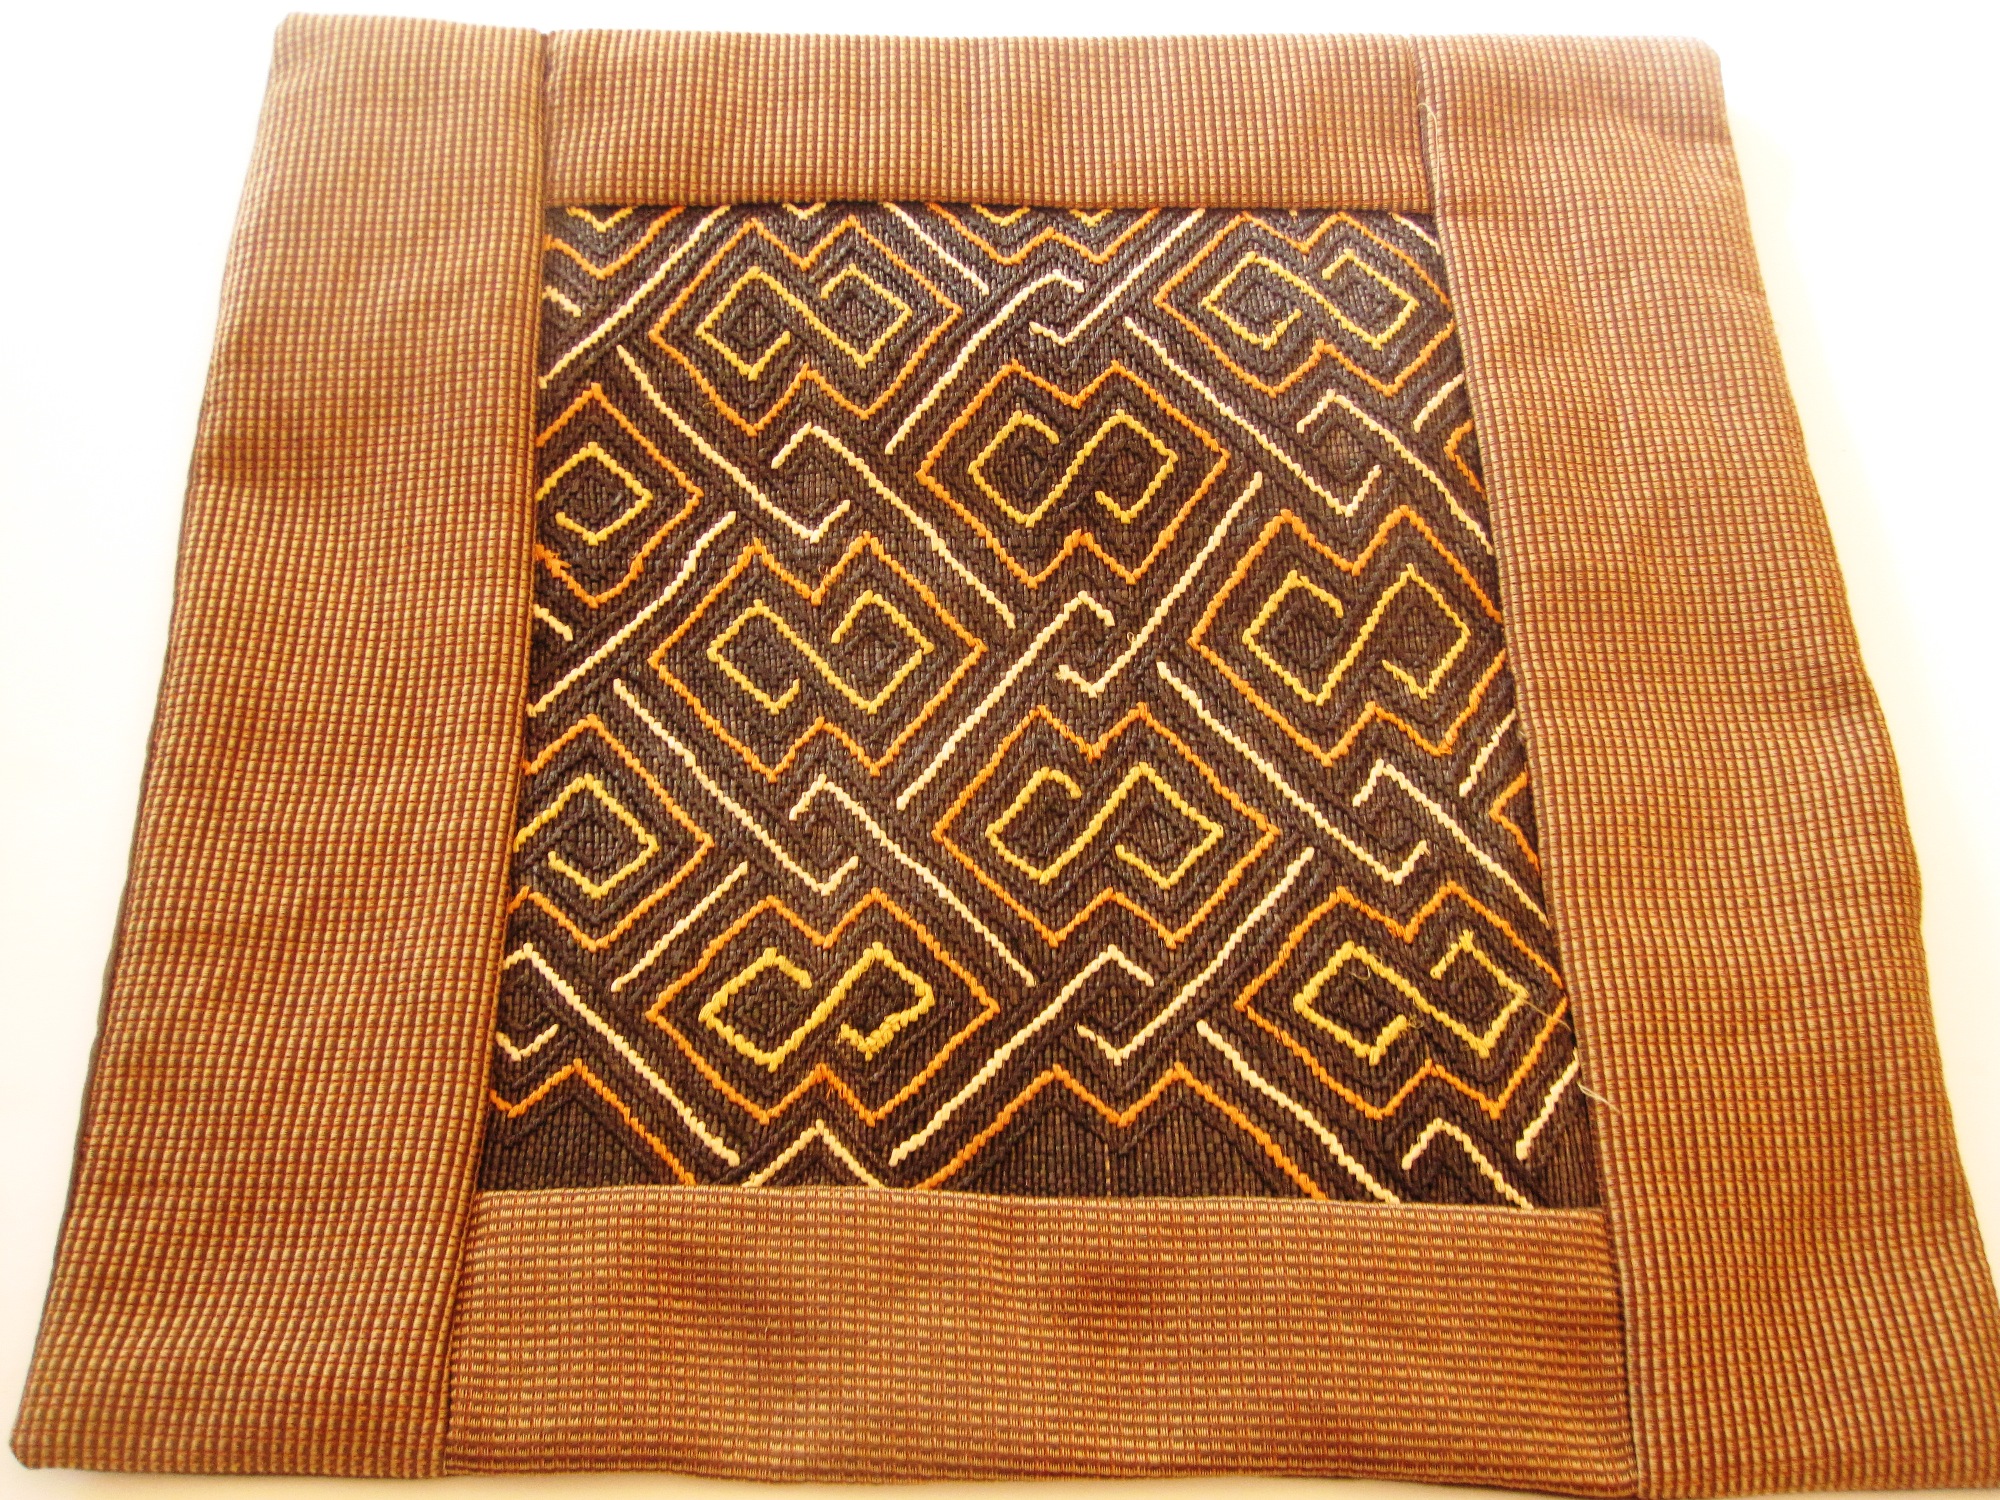 Regional African Cushion Cover #4